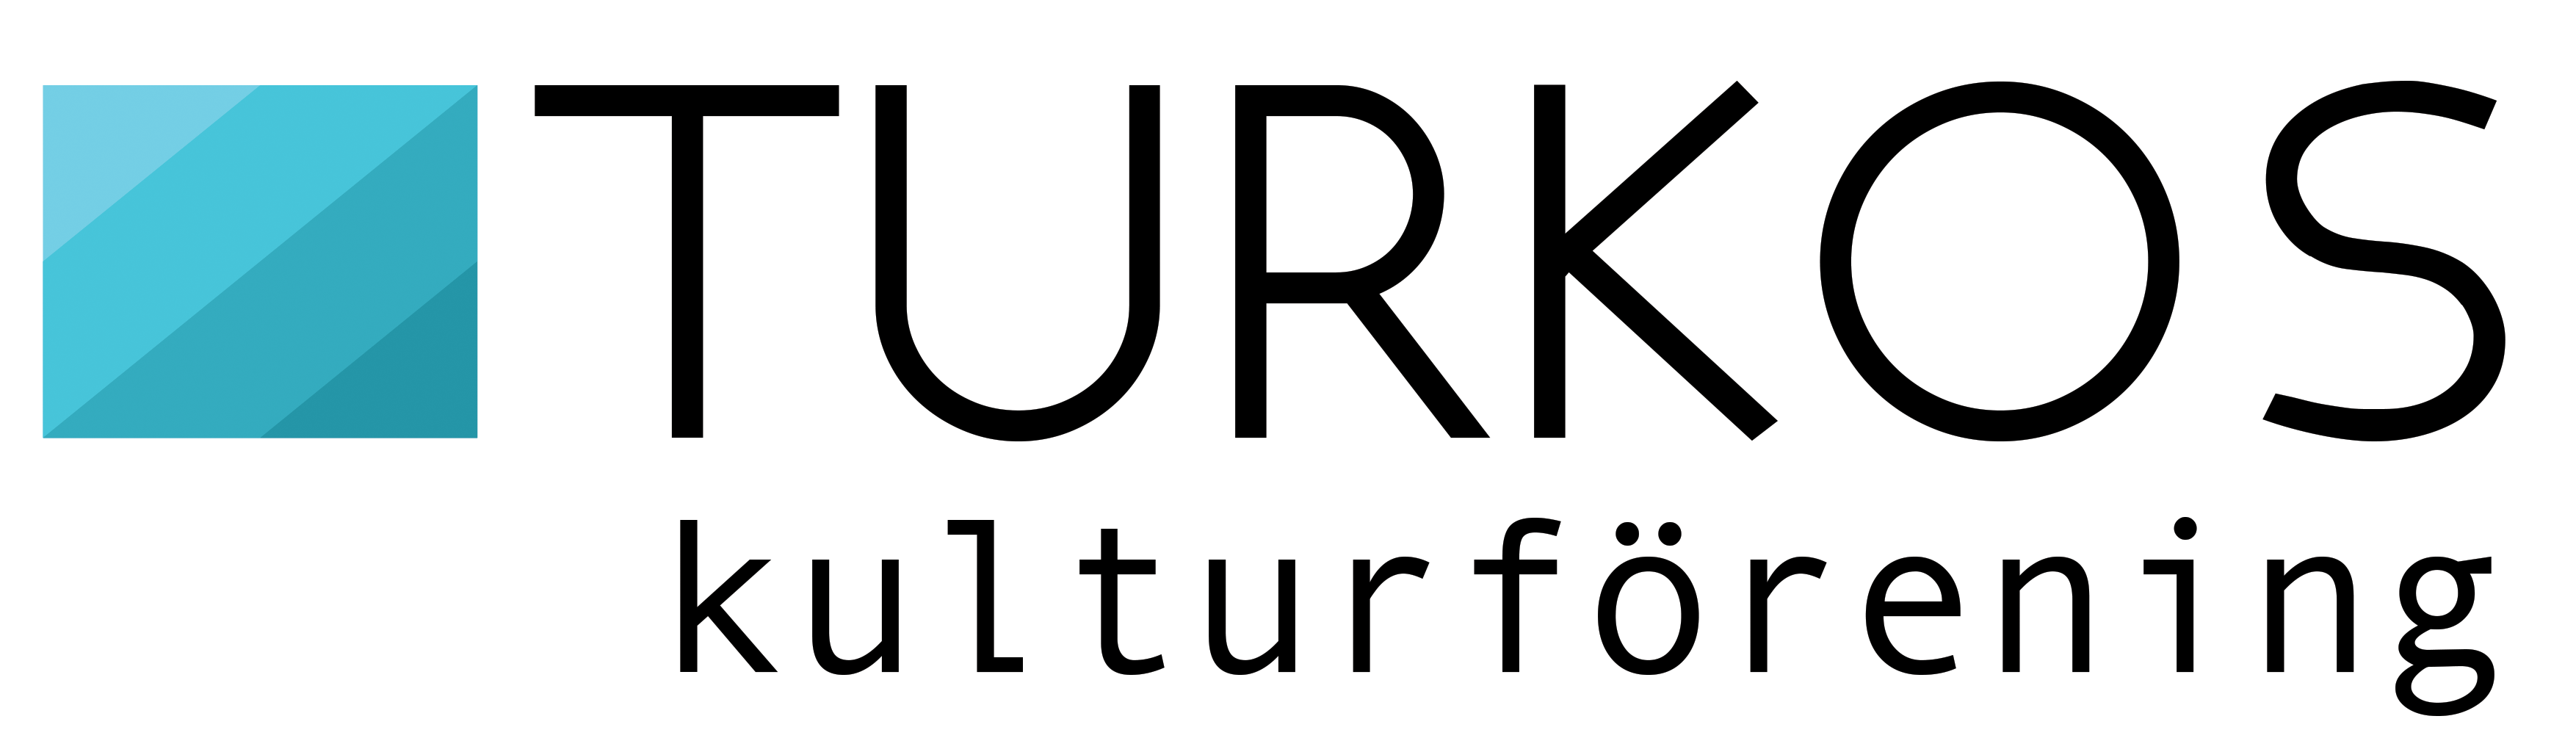 Turkos logo